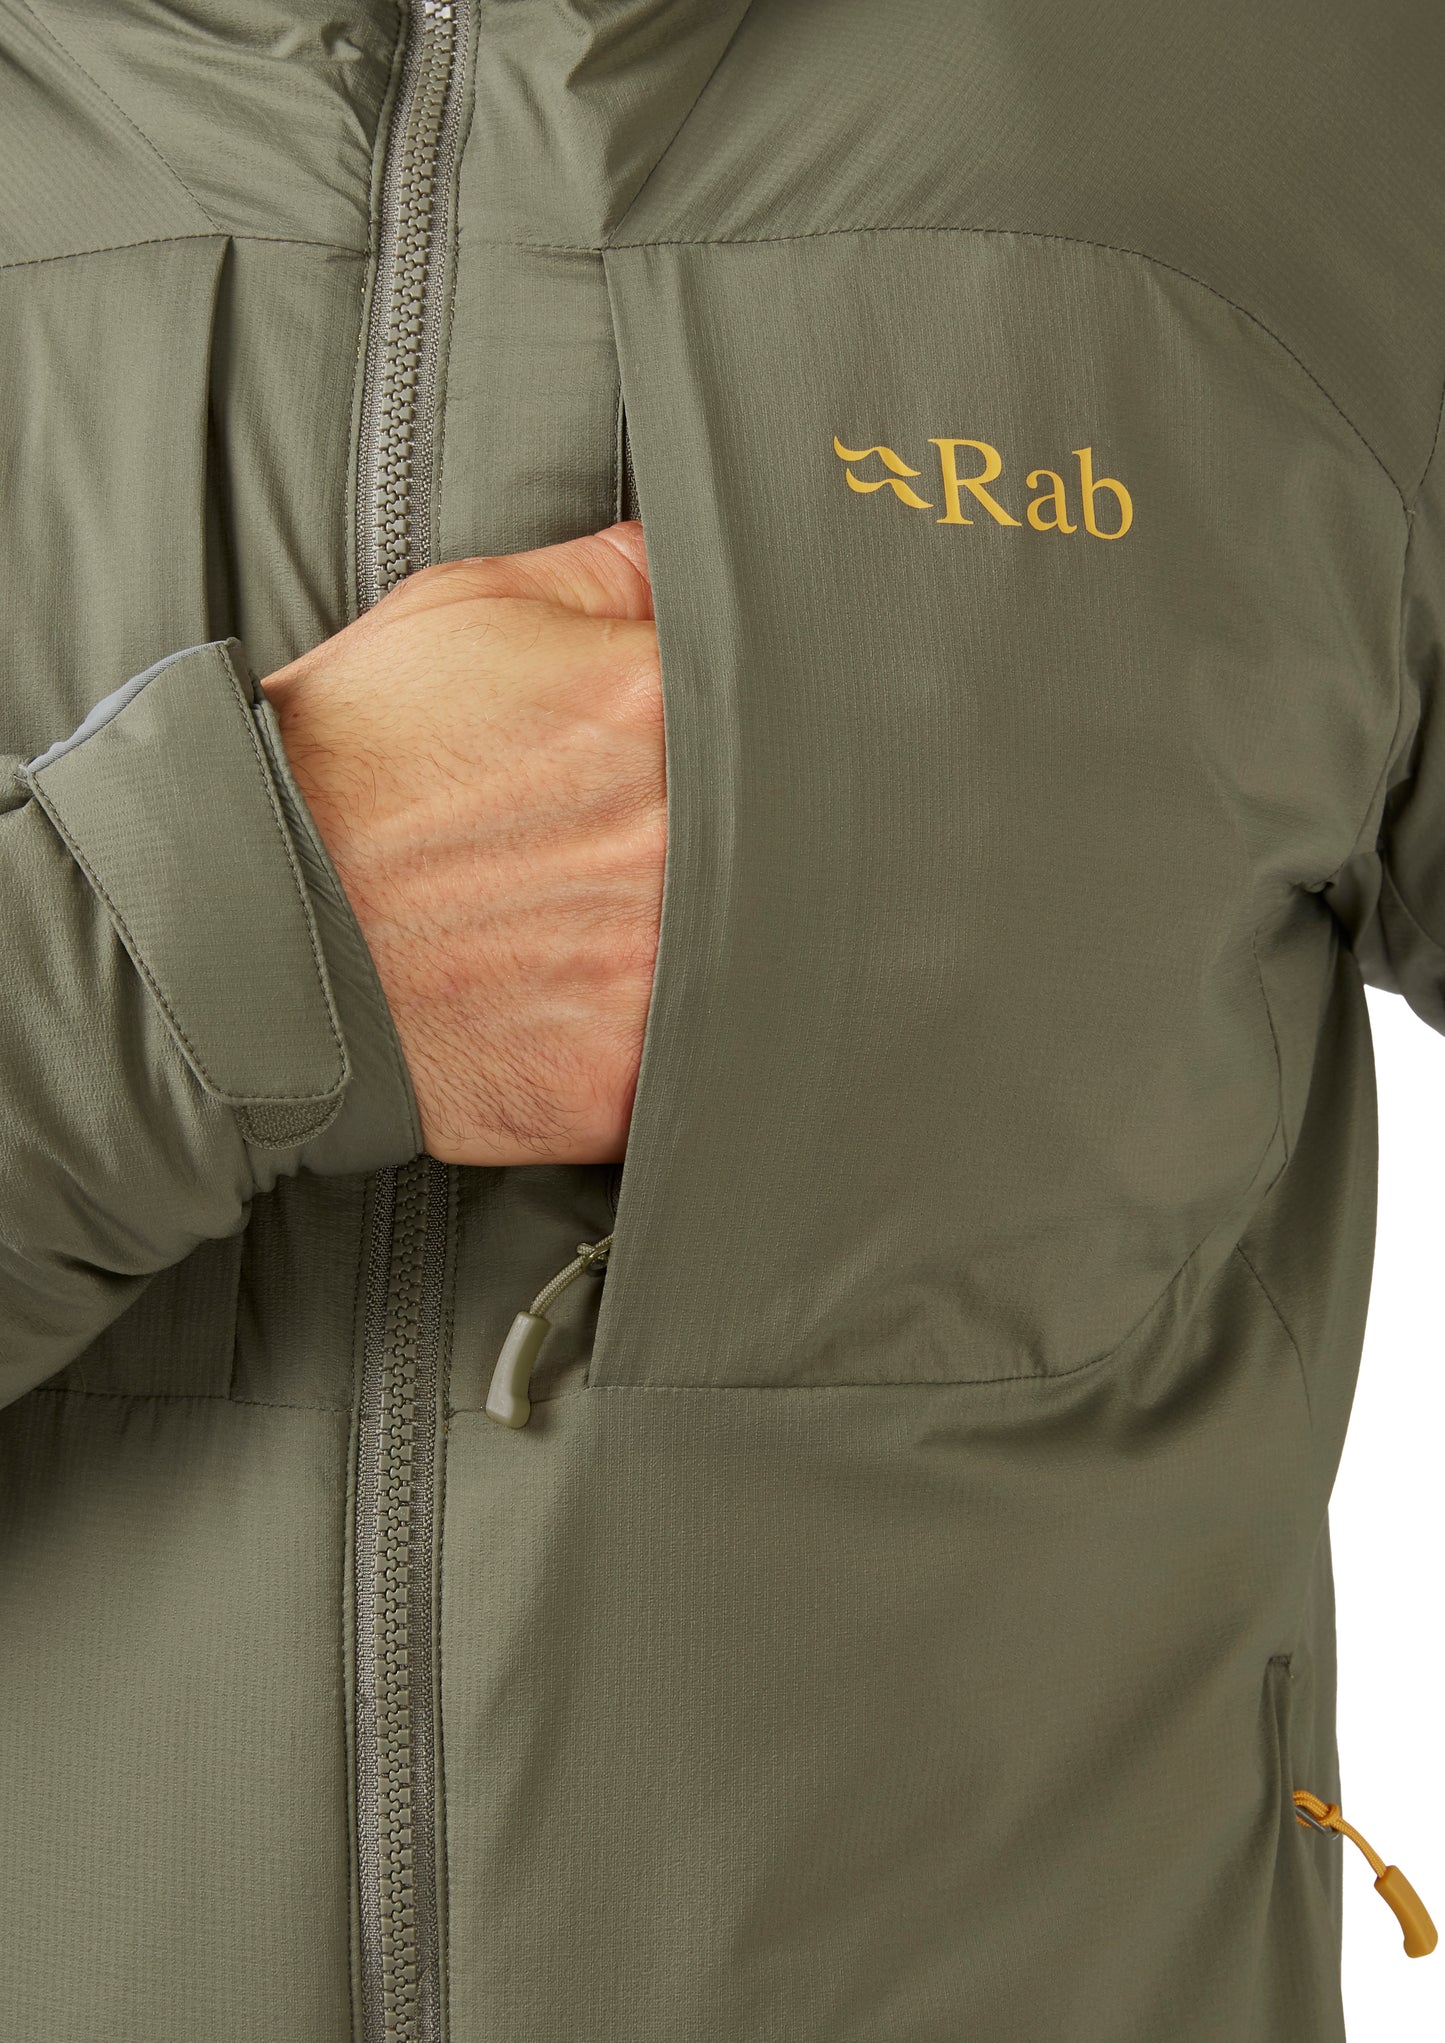 Rab / Xenair Alpine Jacket